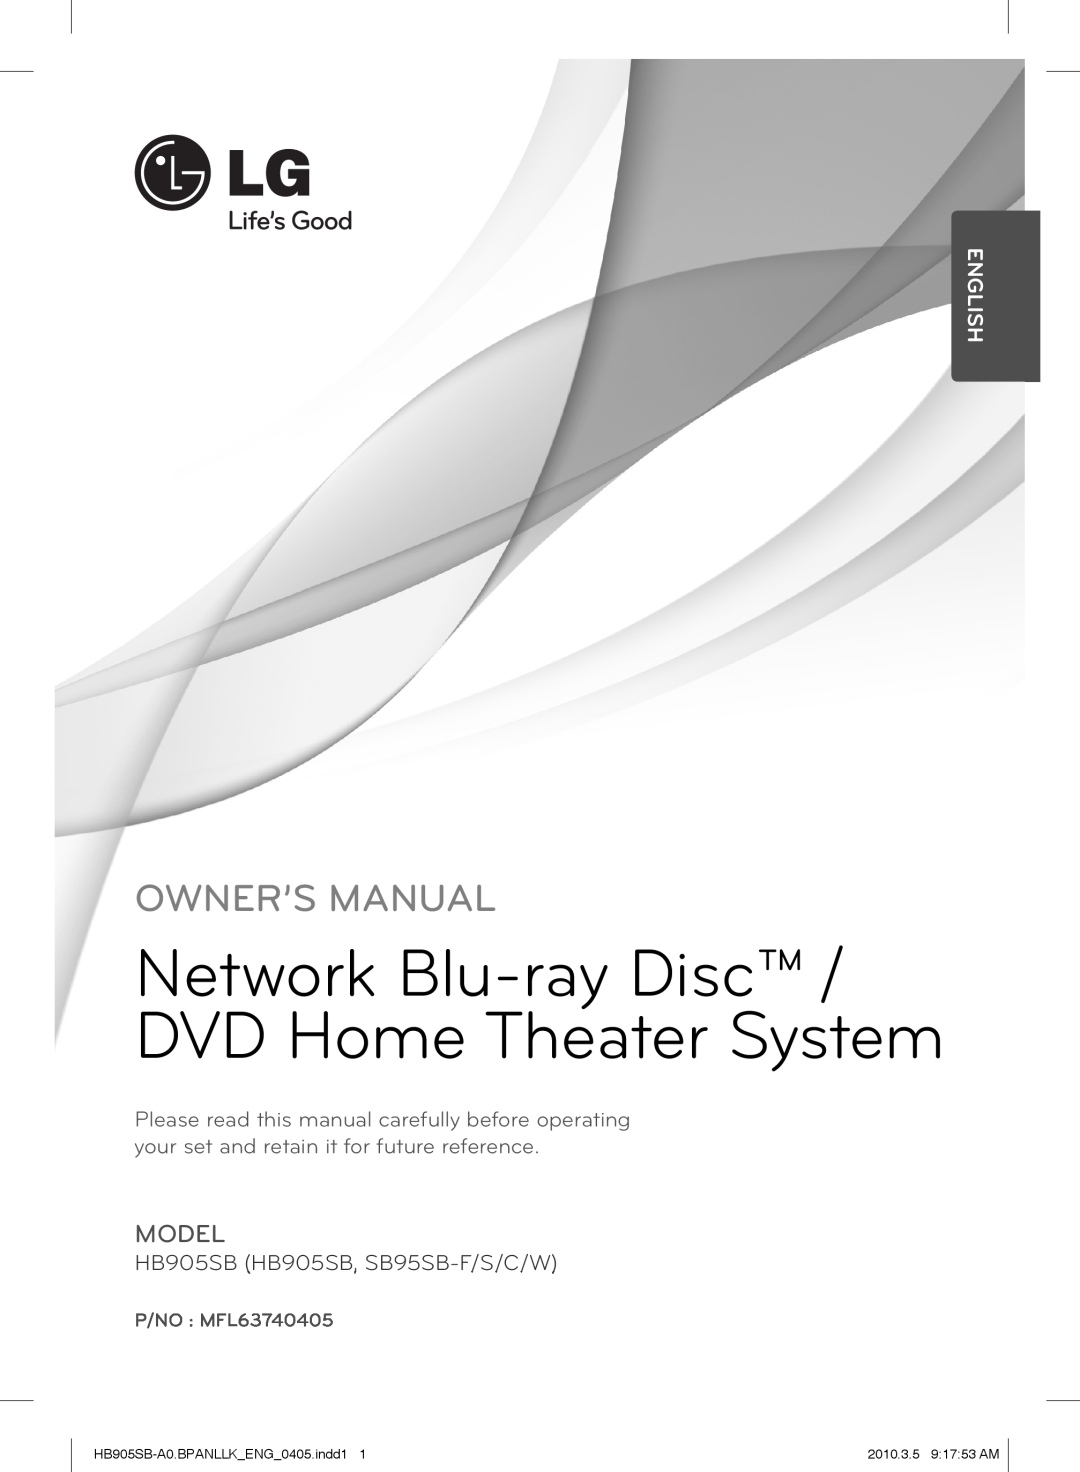 LG Electronics HB905SB owner manual Network Blu-rayDisc / DVD Home Theater System, Model, English, P/NO MFL63740405 